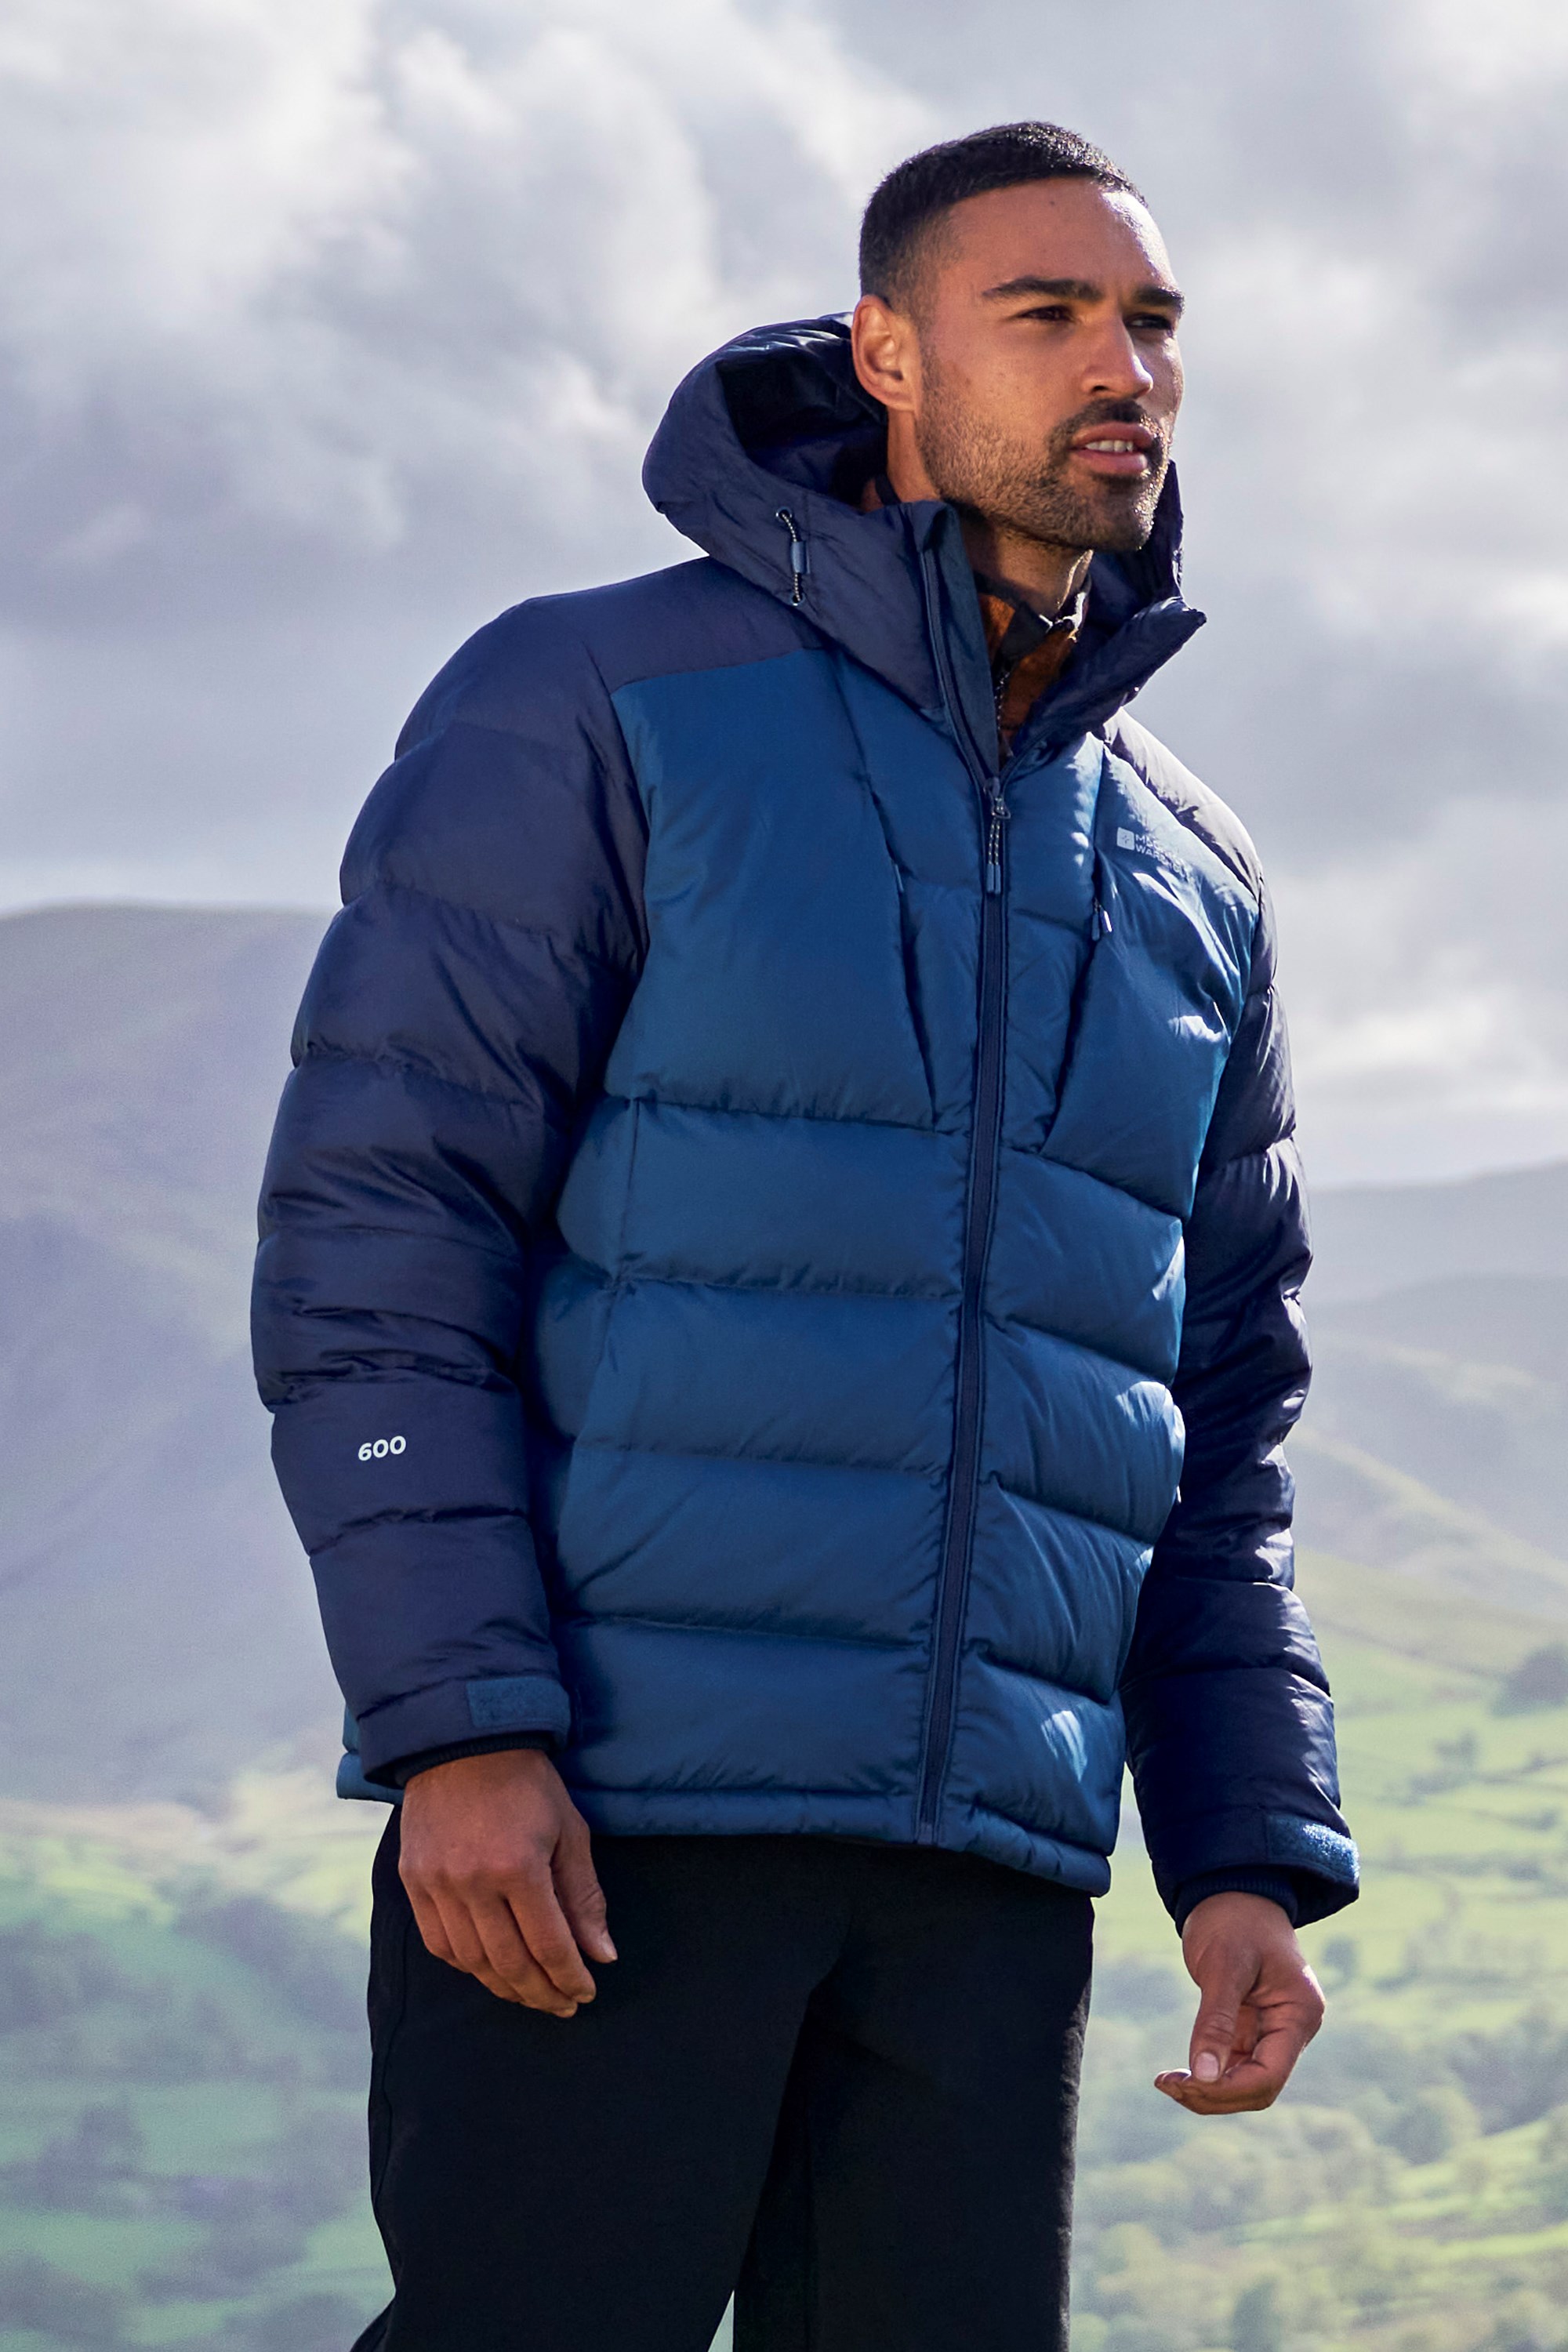 Extreme Mountain Warehouse IsoDry 10000 Waterproof Breathable Jacket Size  10